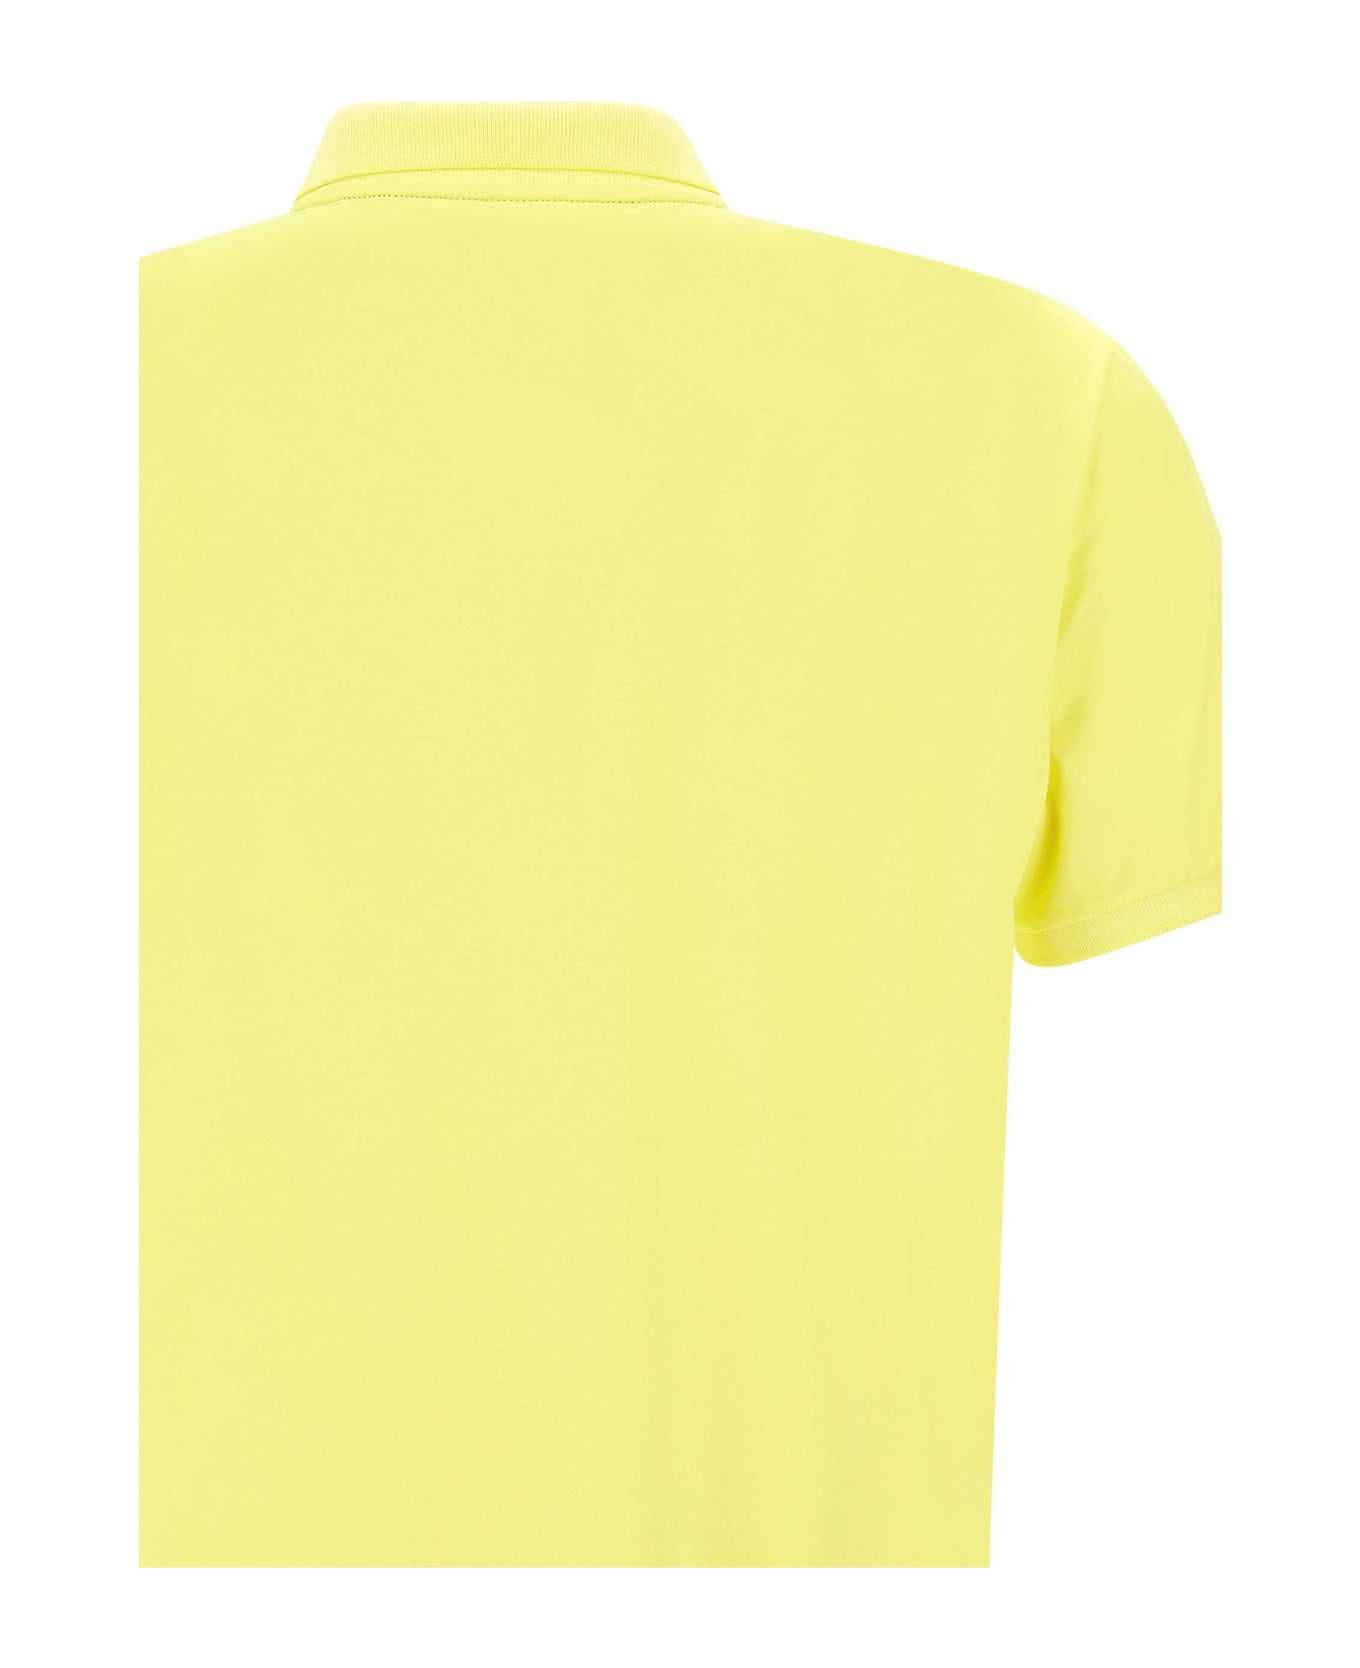 RRD - Roberto Ricci Design "gdy" Oxford Cotton T-shirt - YELLOW